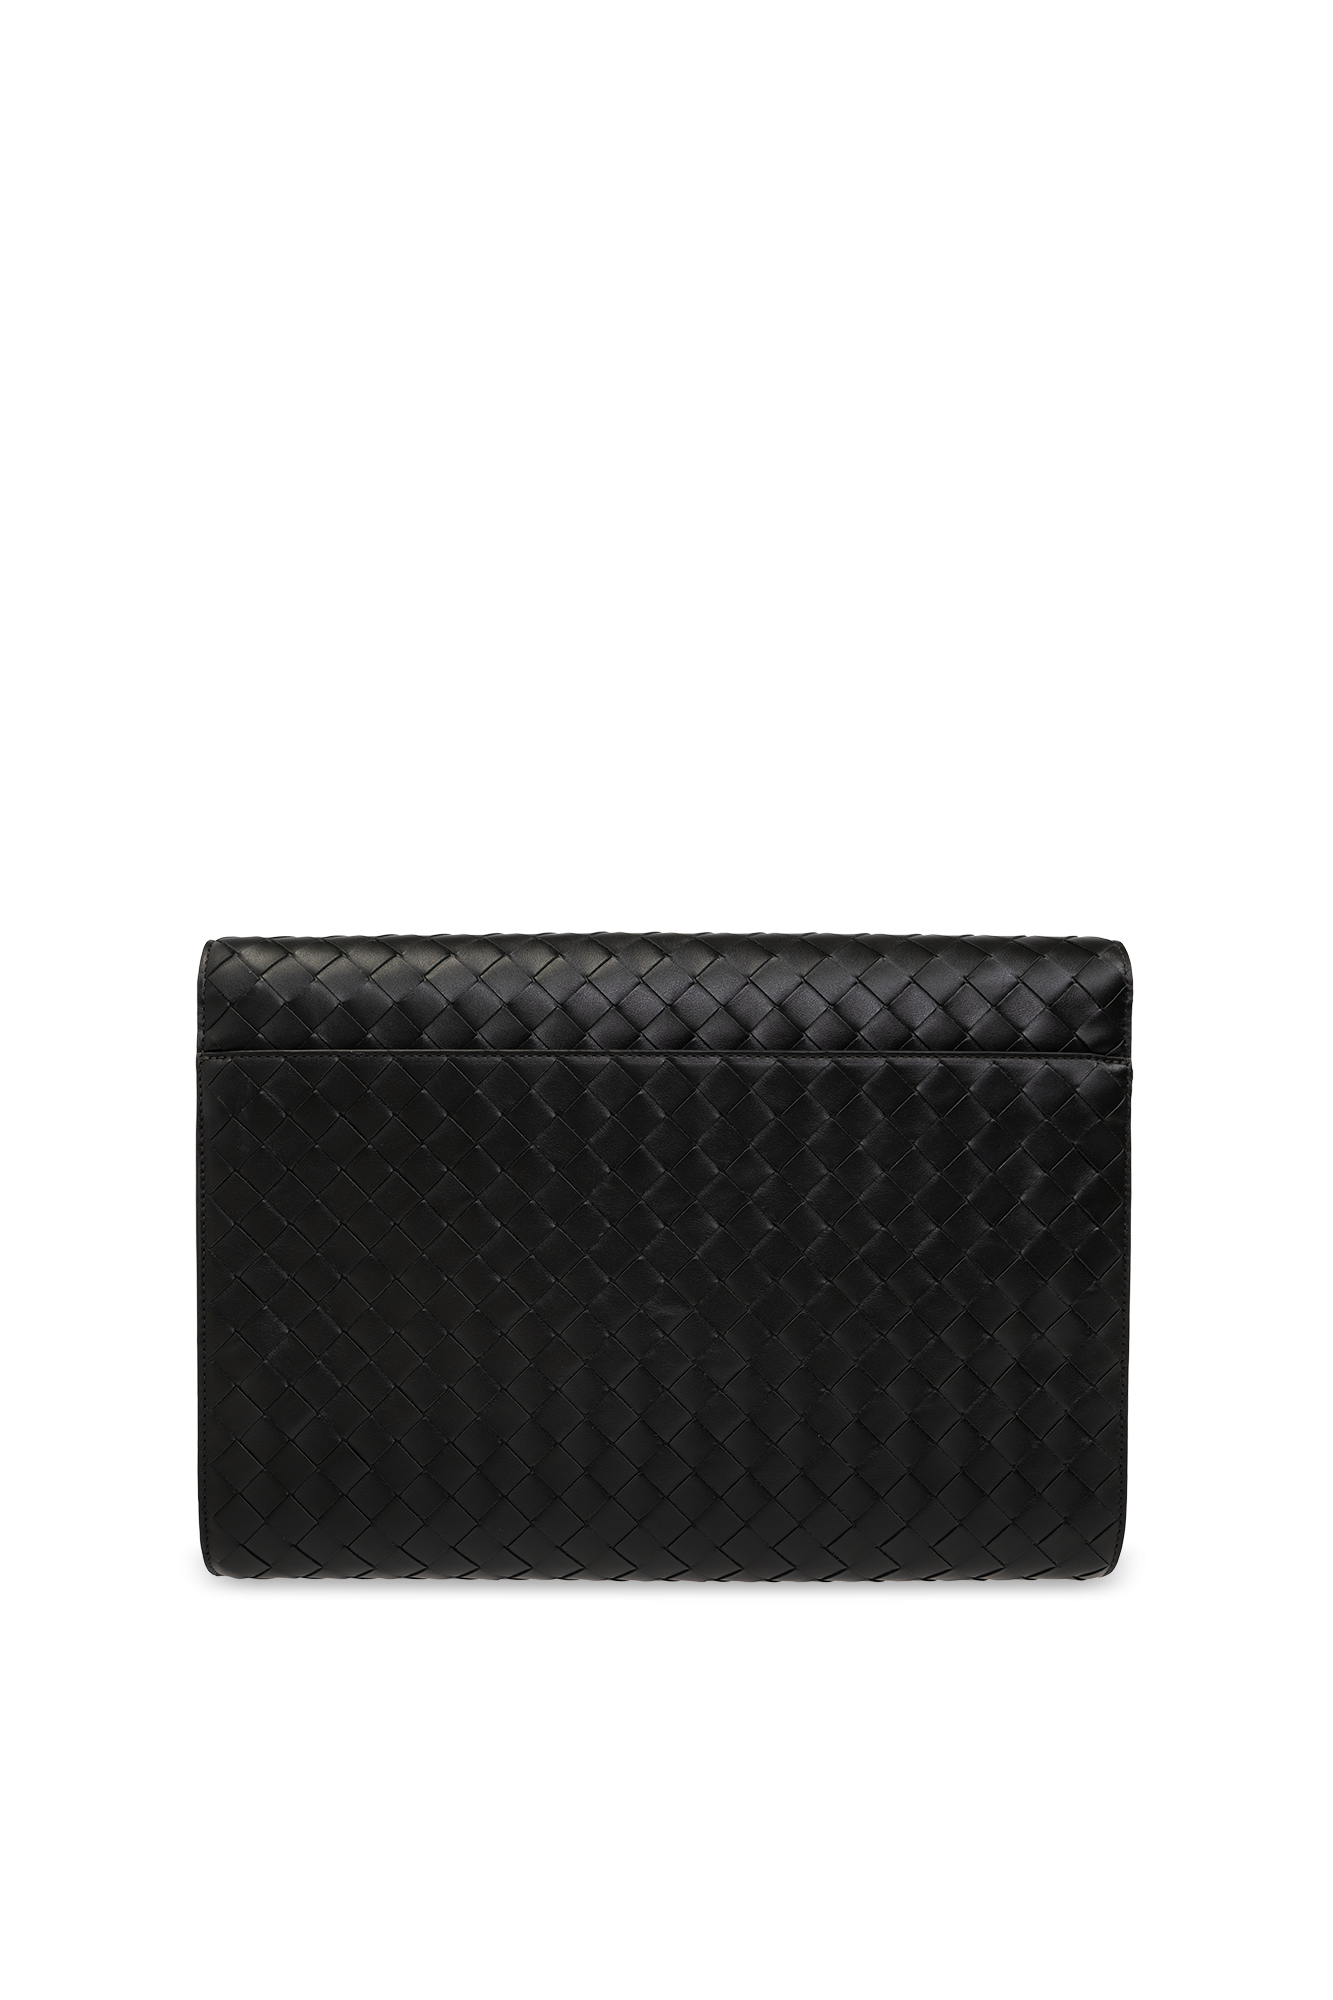 Bottega Veneta Leather briefcase